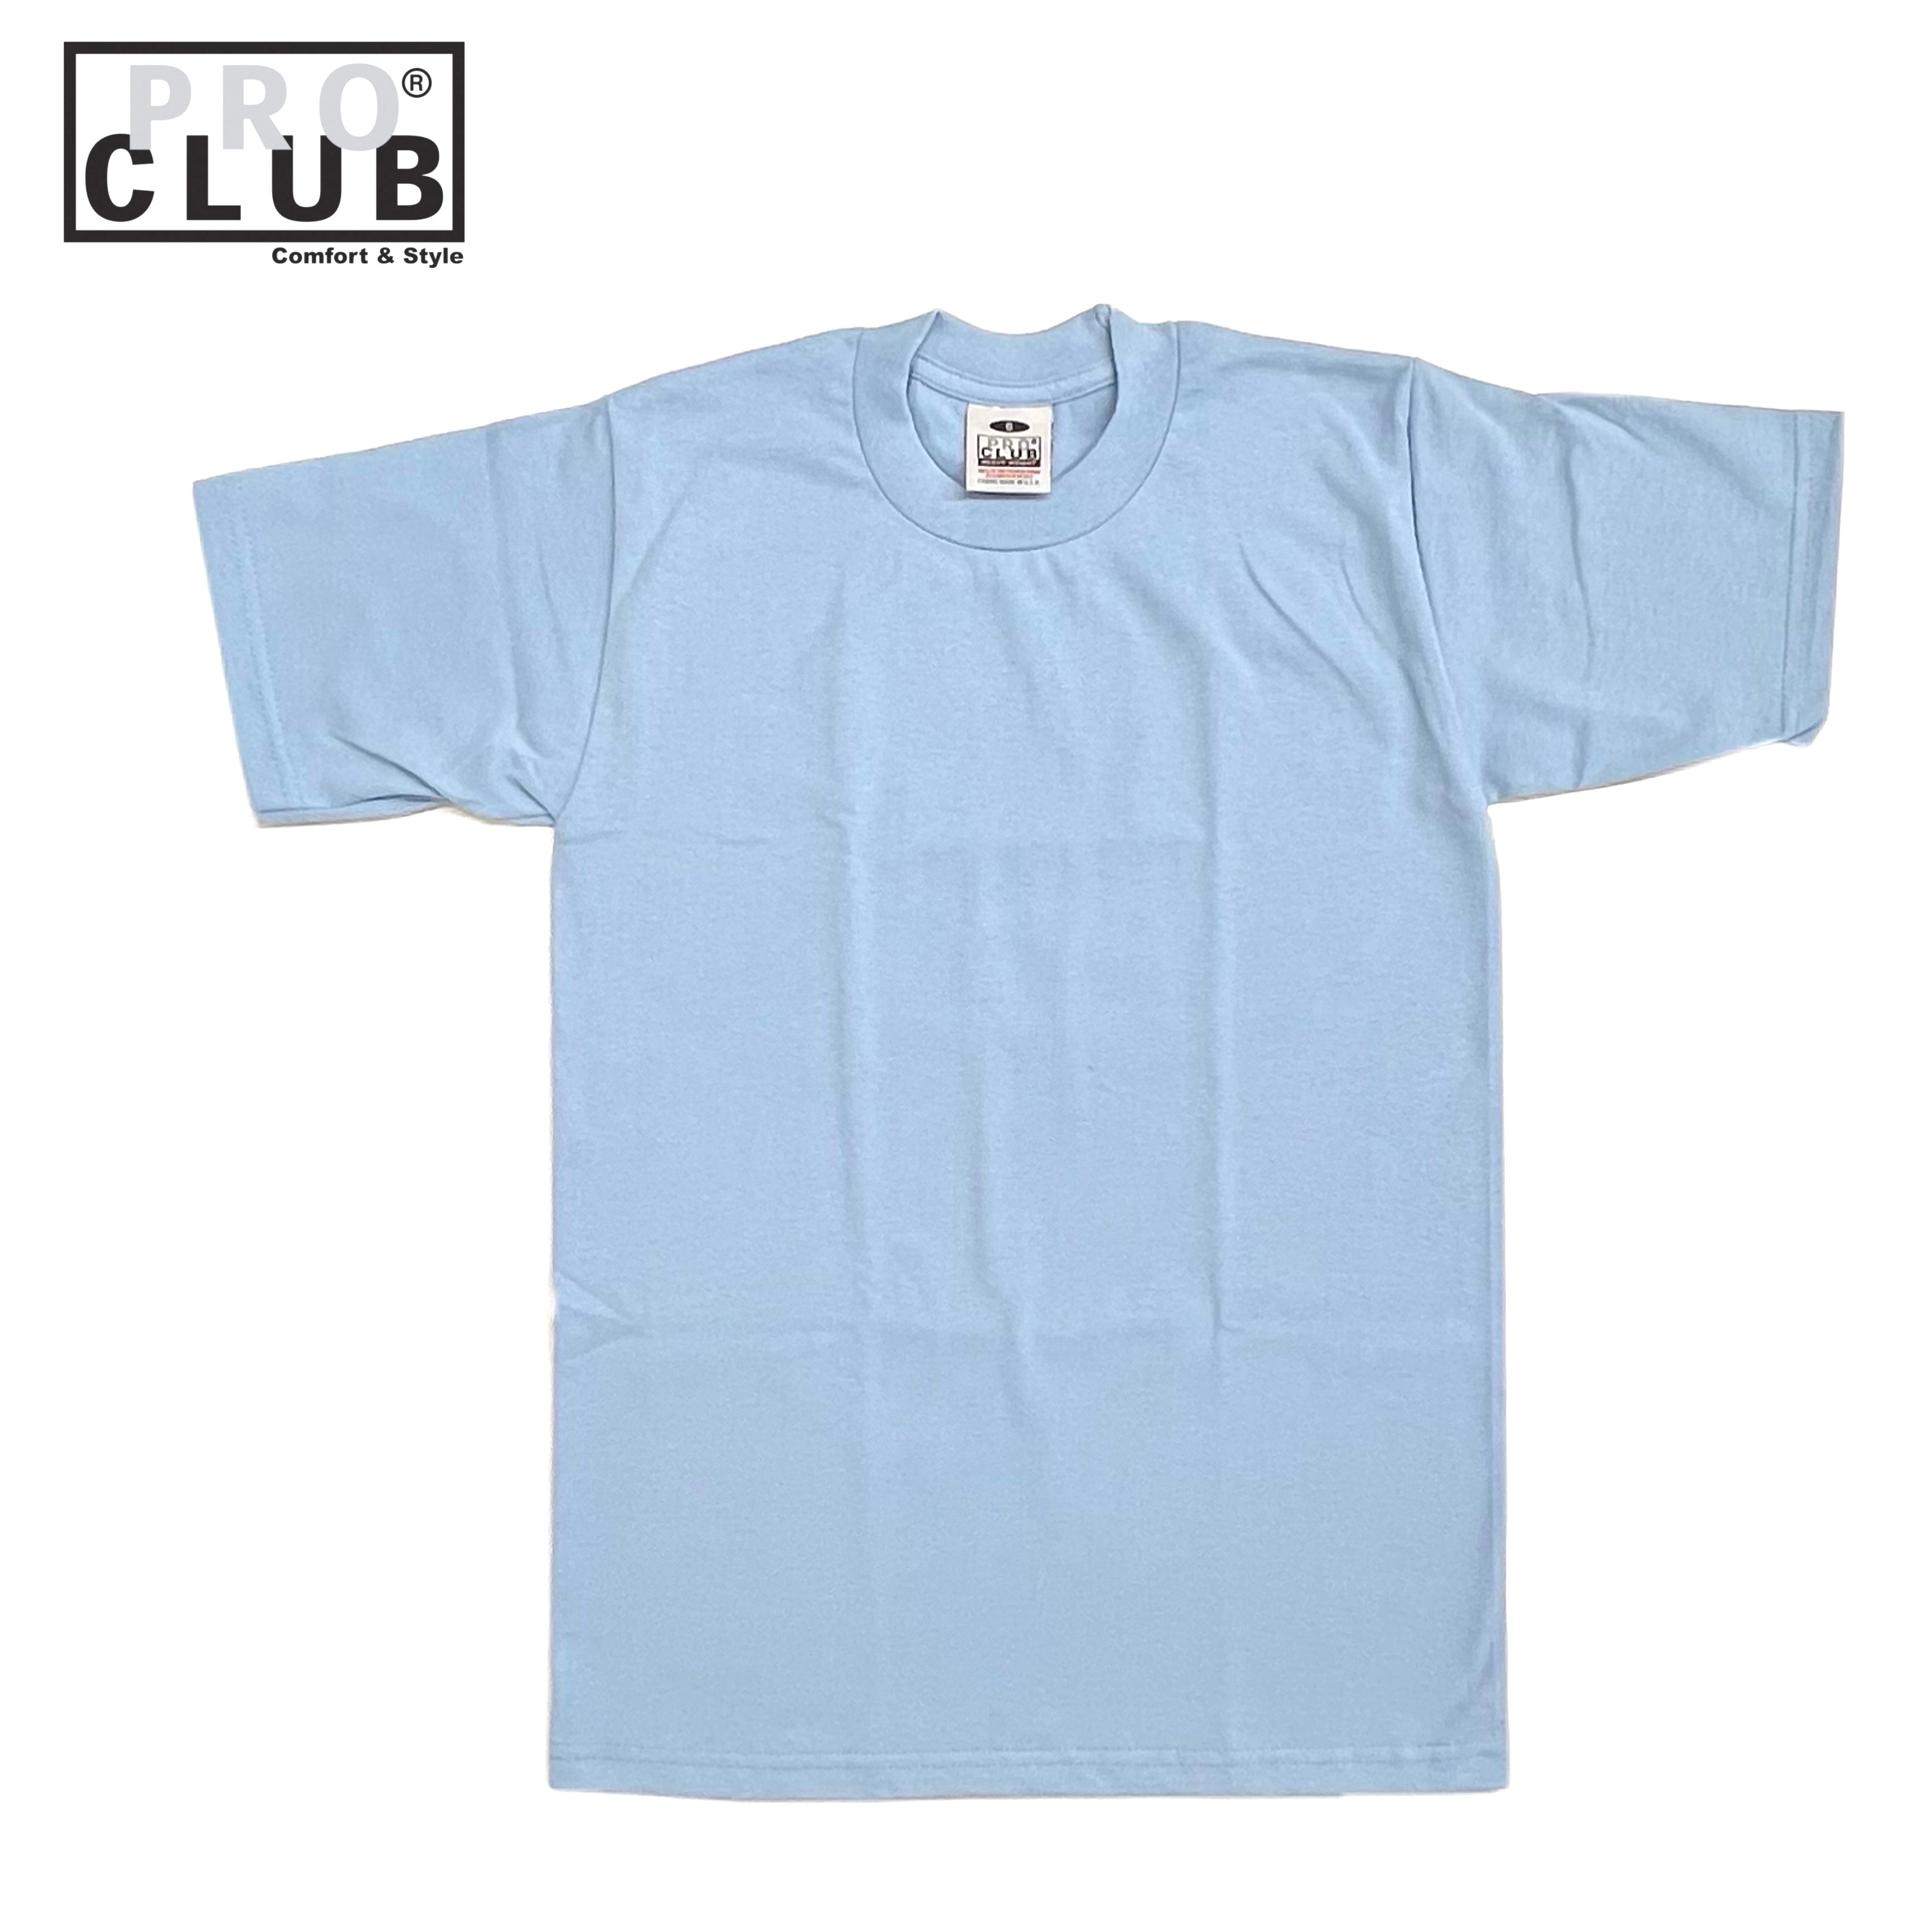 Pro Club Men's Heavyweight Short Sleeve T-Shirt - Sky Blue